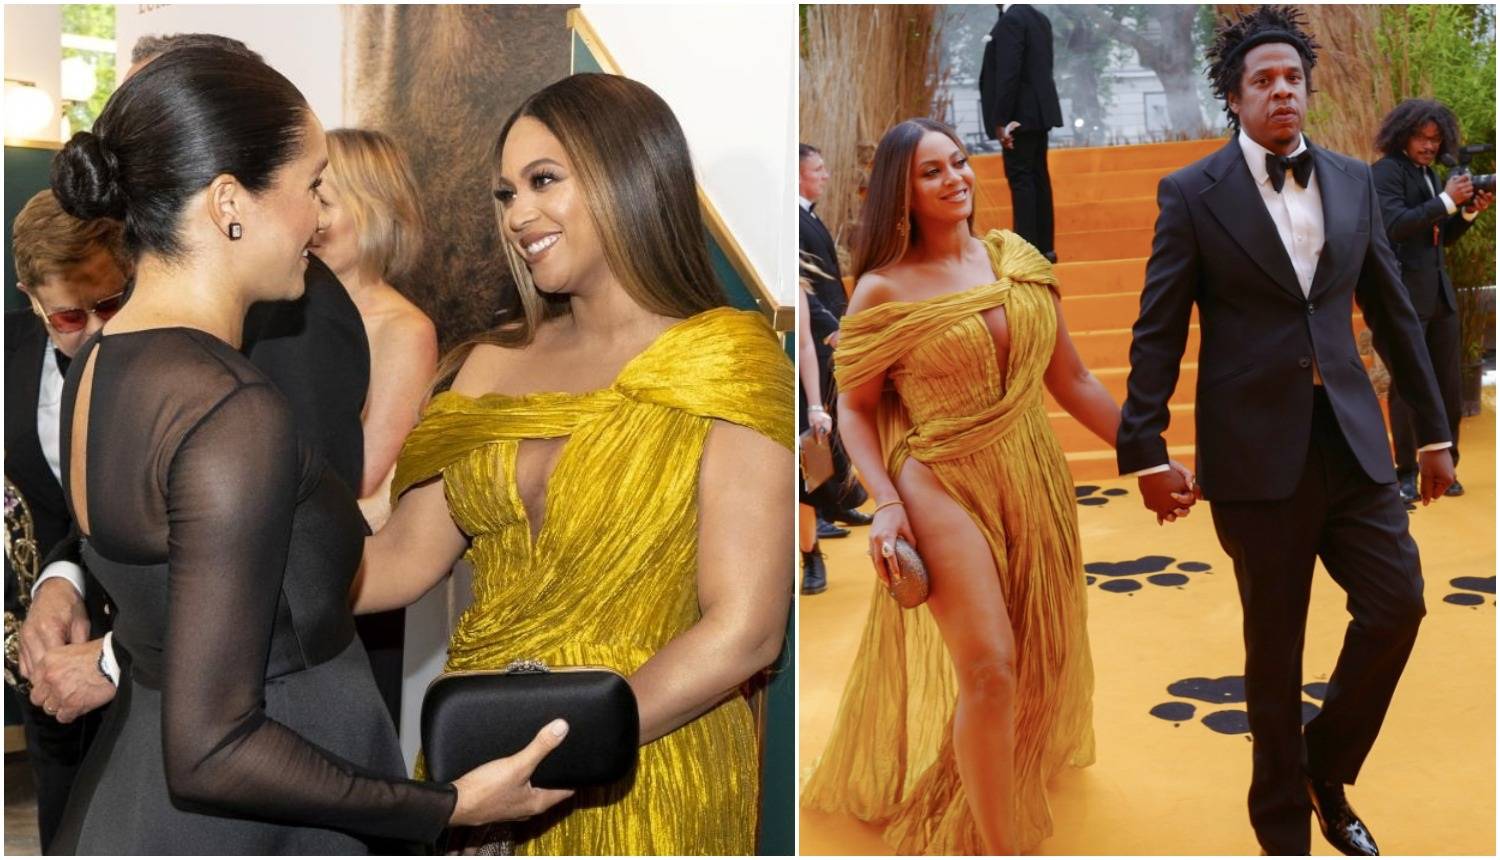 'Cure' detalji skandala: Meghan ludjela zbog Beyonceine haljine